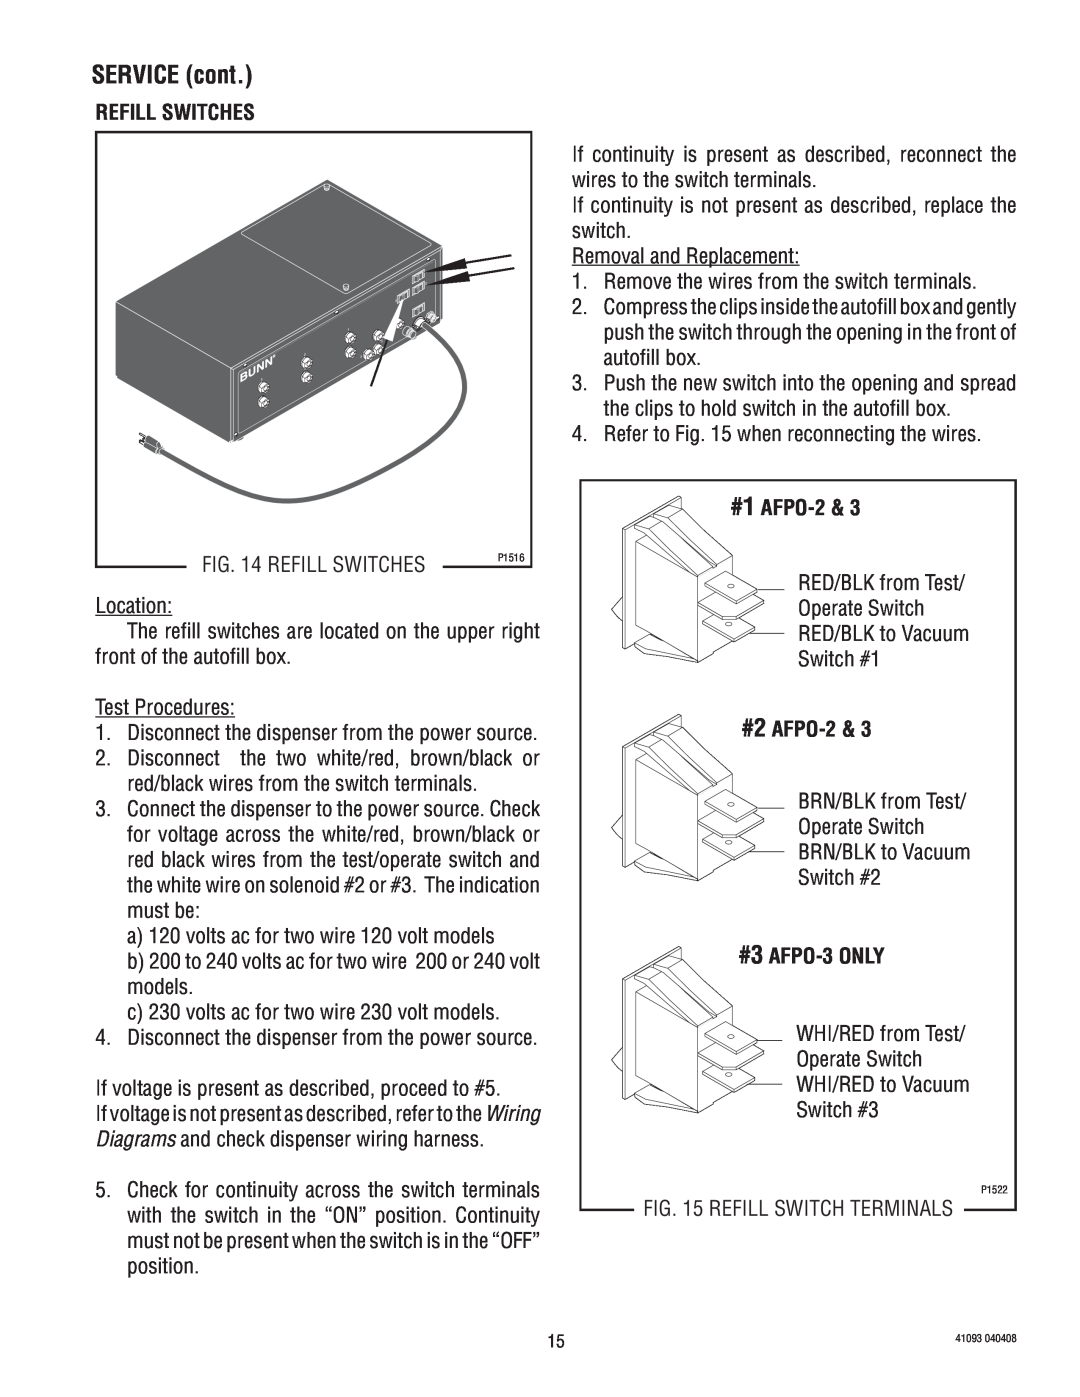 Bunn AFPO-3 SL manual Refill Switches, SERVICE cont, #1 AFPO-2, #2 AFPO-2, #3 AFPO-3 ONLY 